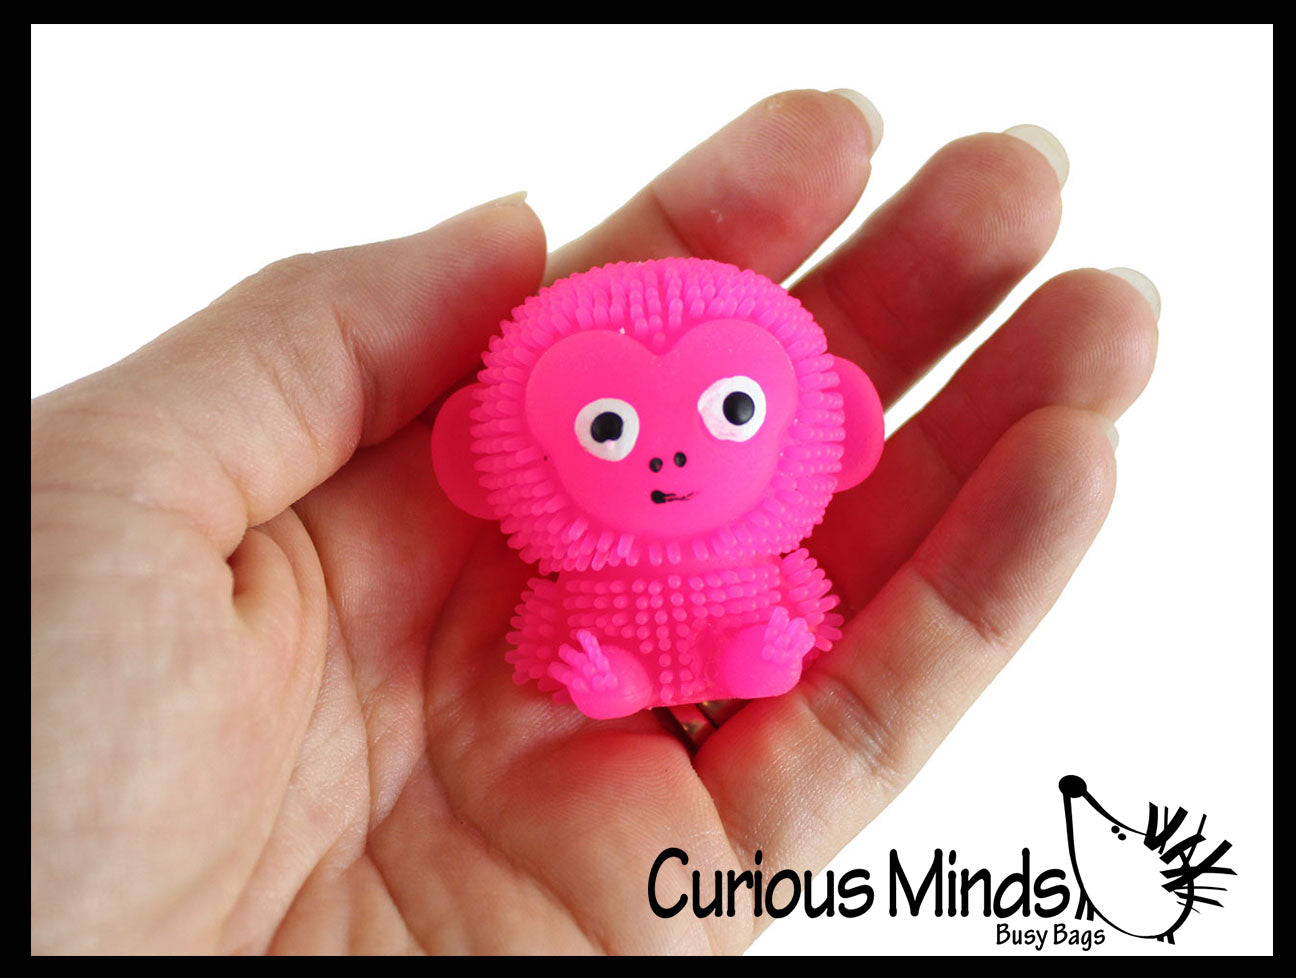 Cute Tiny Monkey Animal Figurines - Mini Toys - Small Novelty Prize To